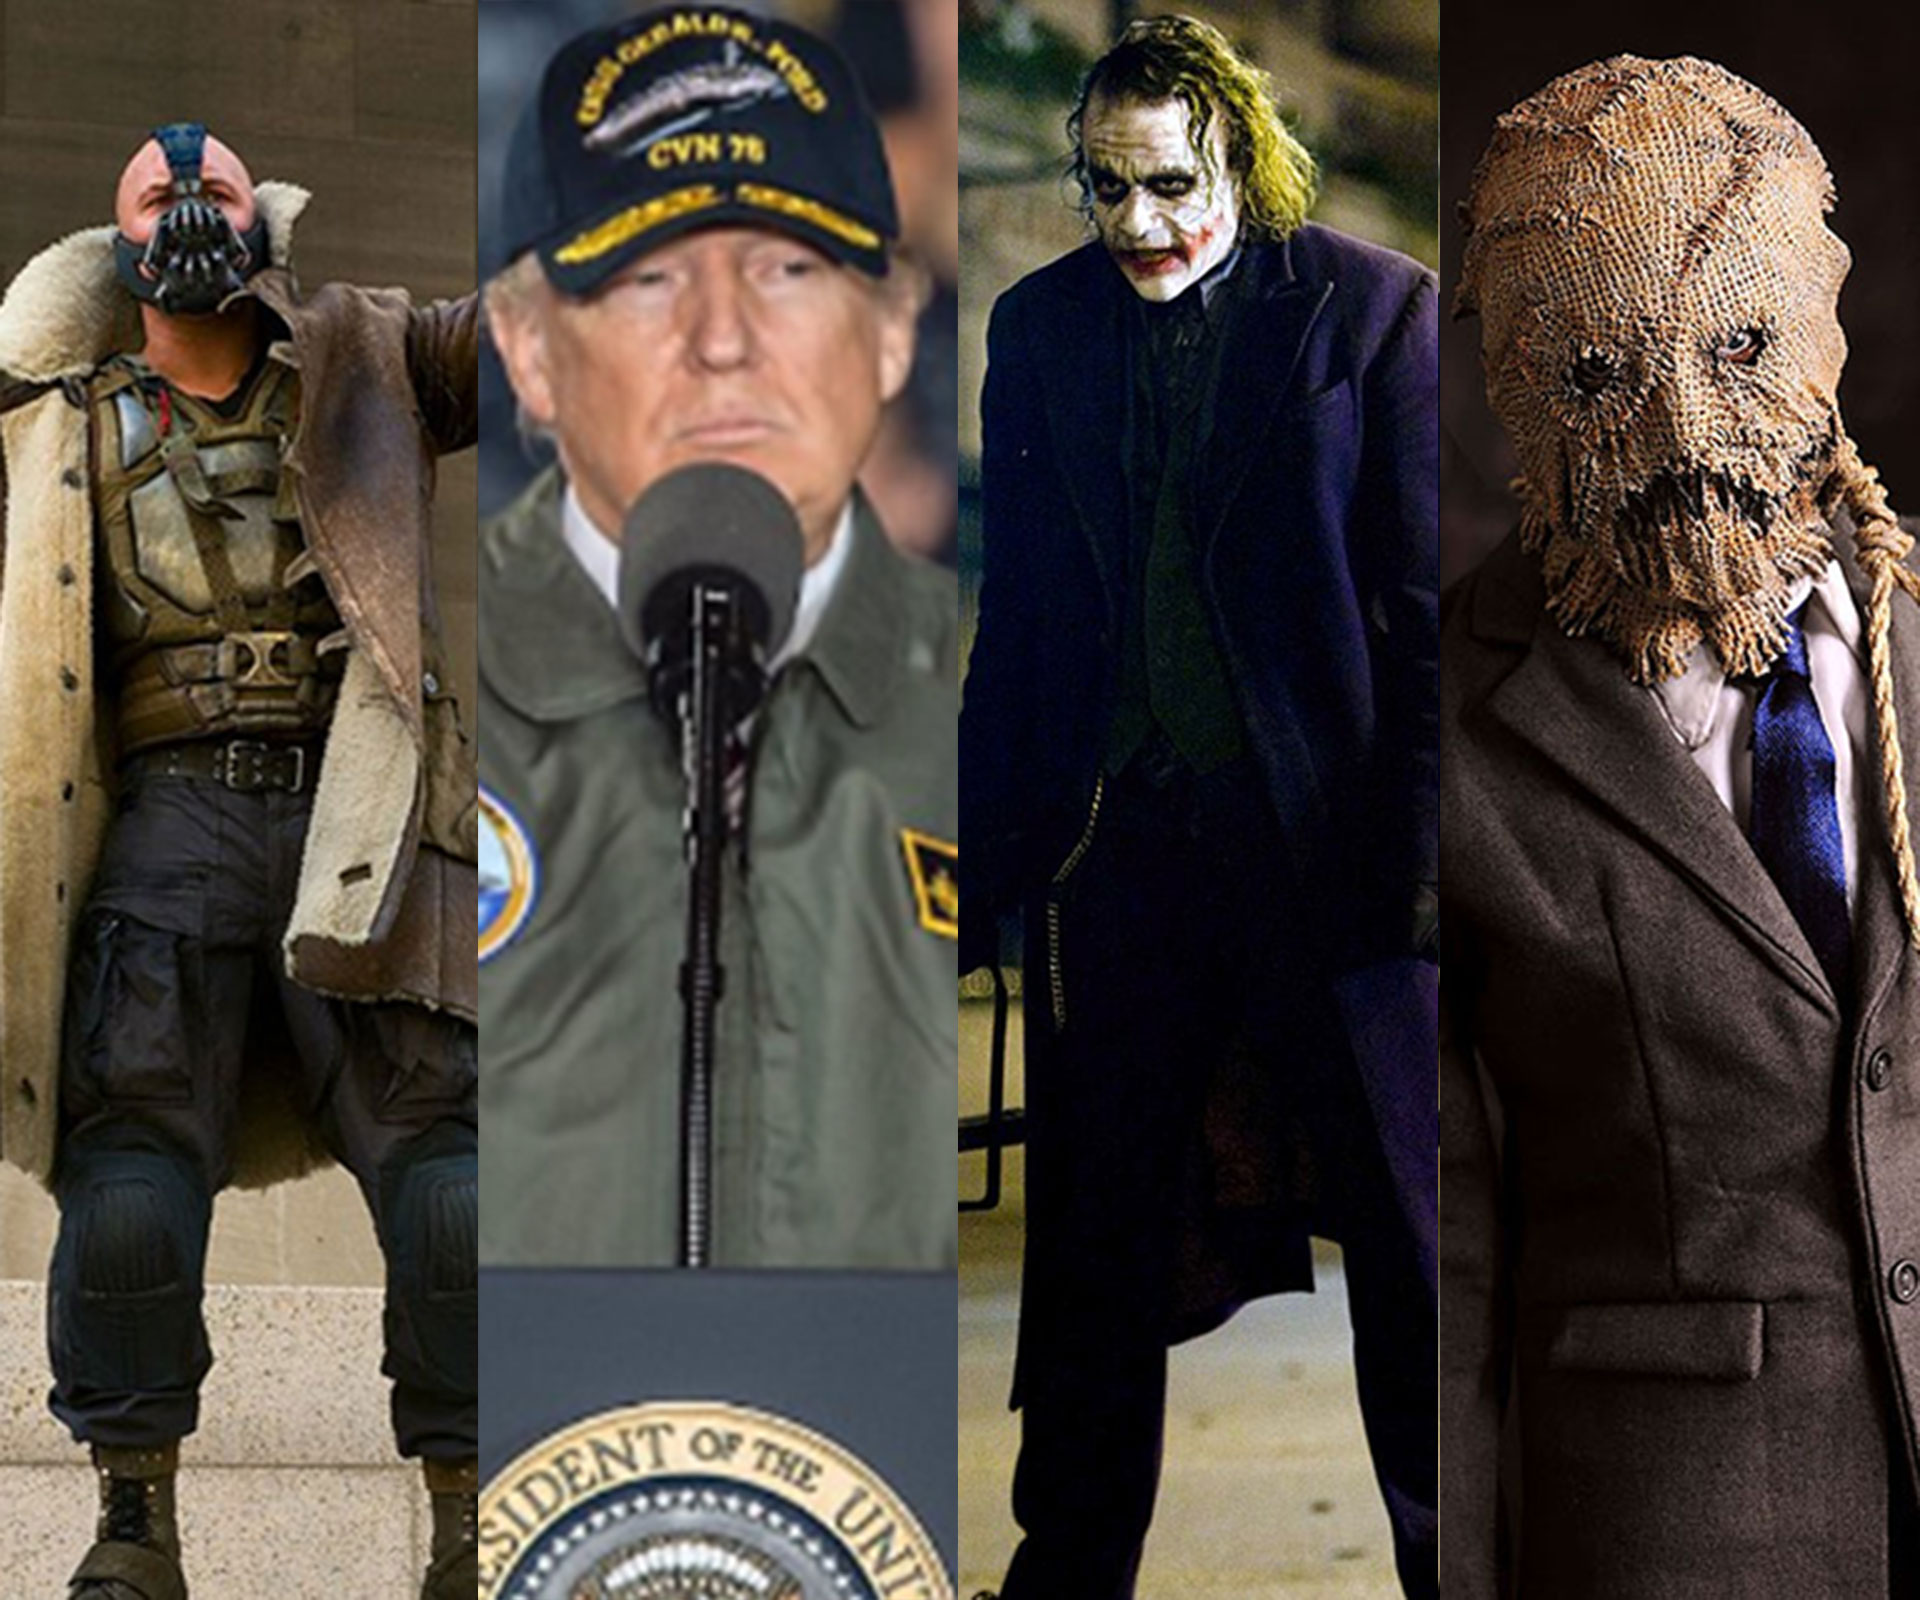 Who said it: Donald Trump or Batman villain?